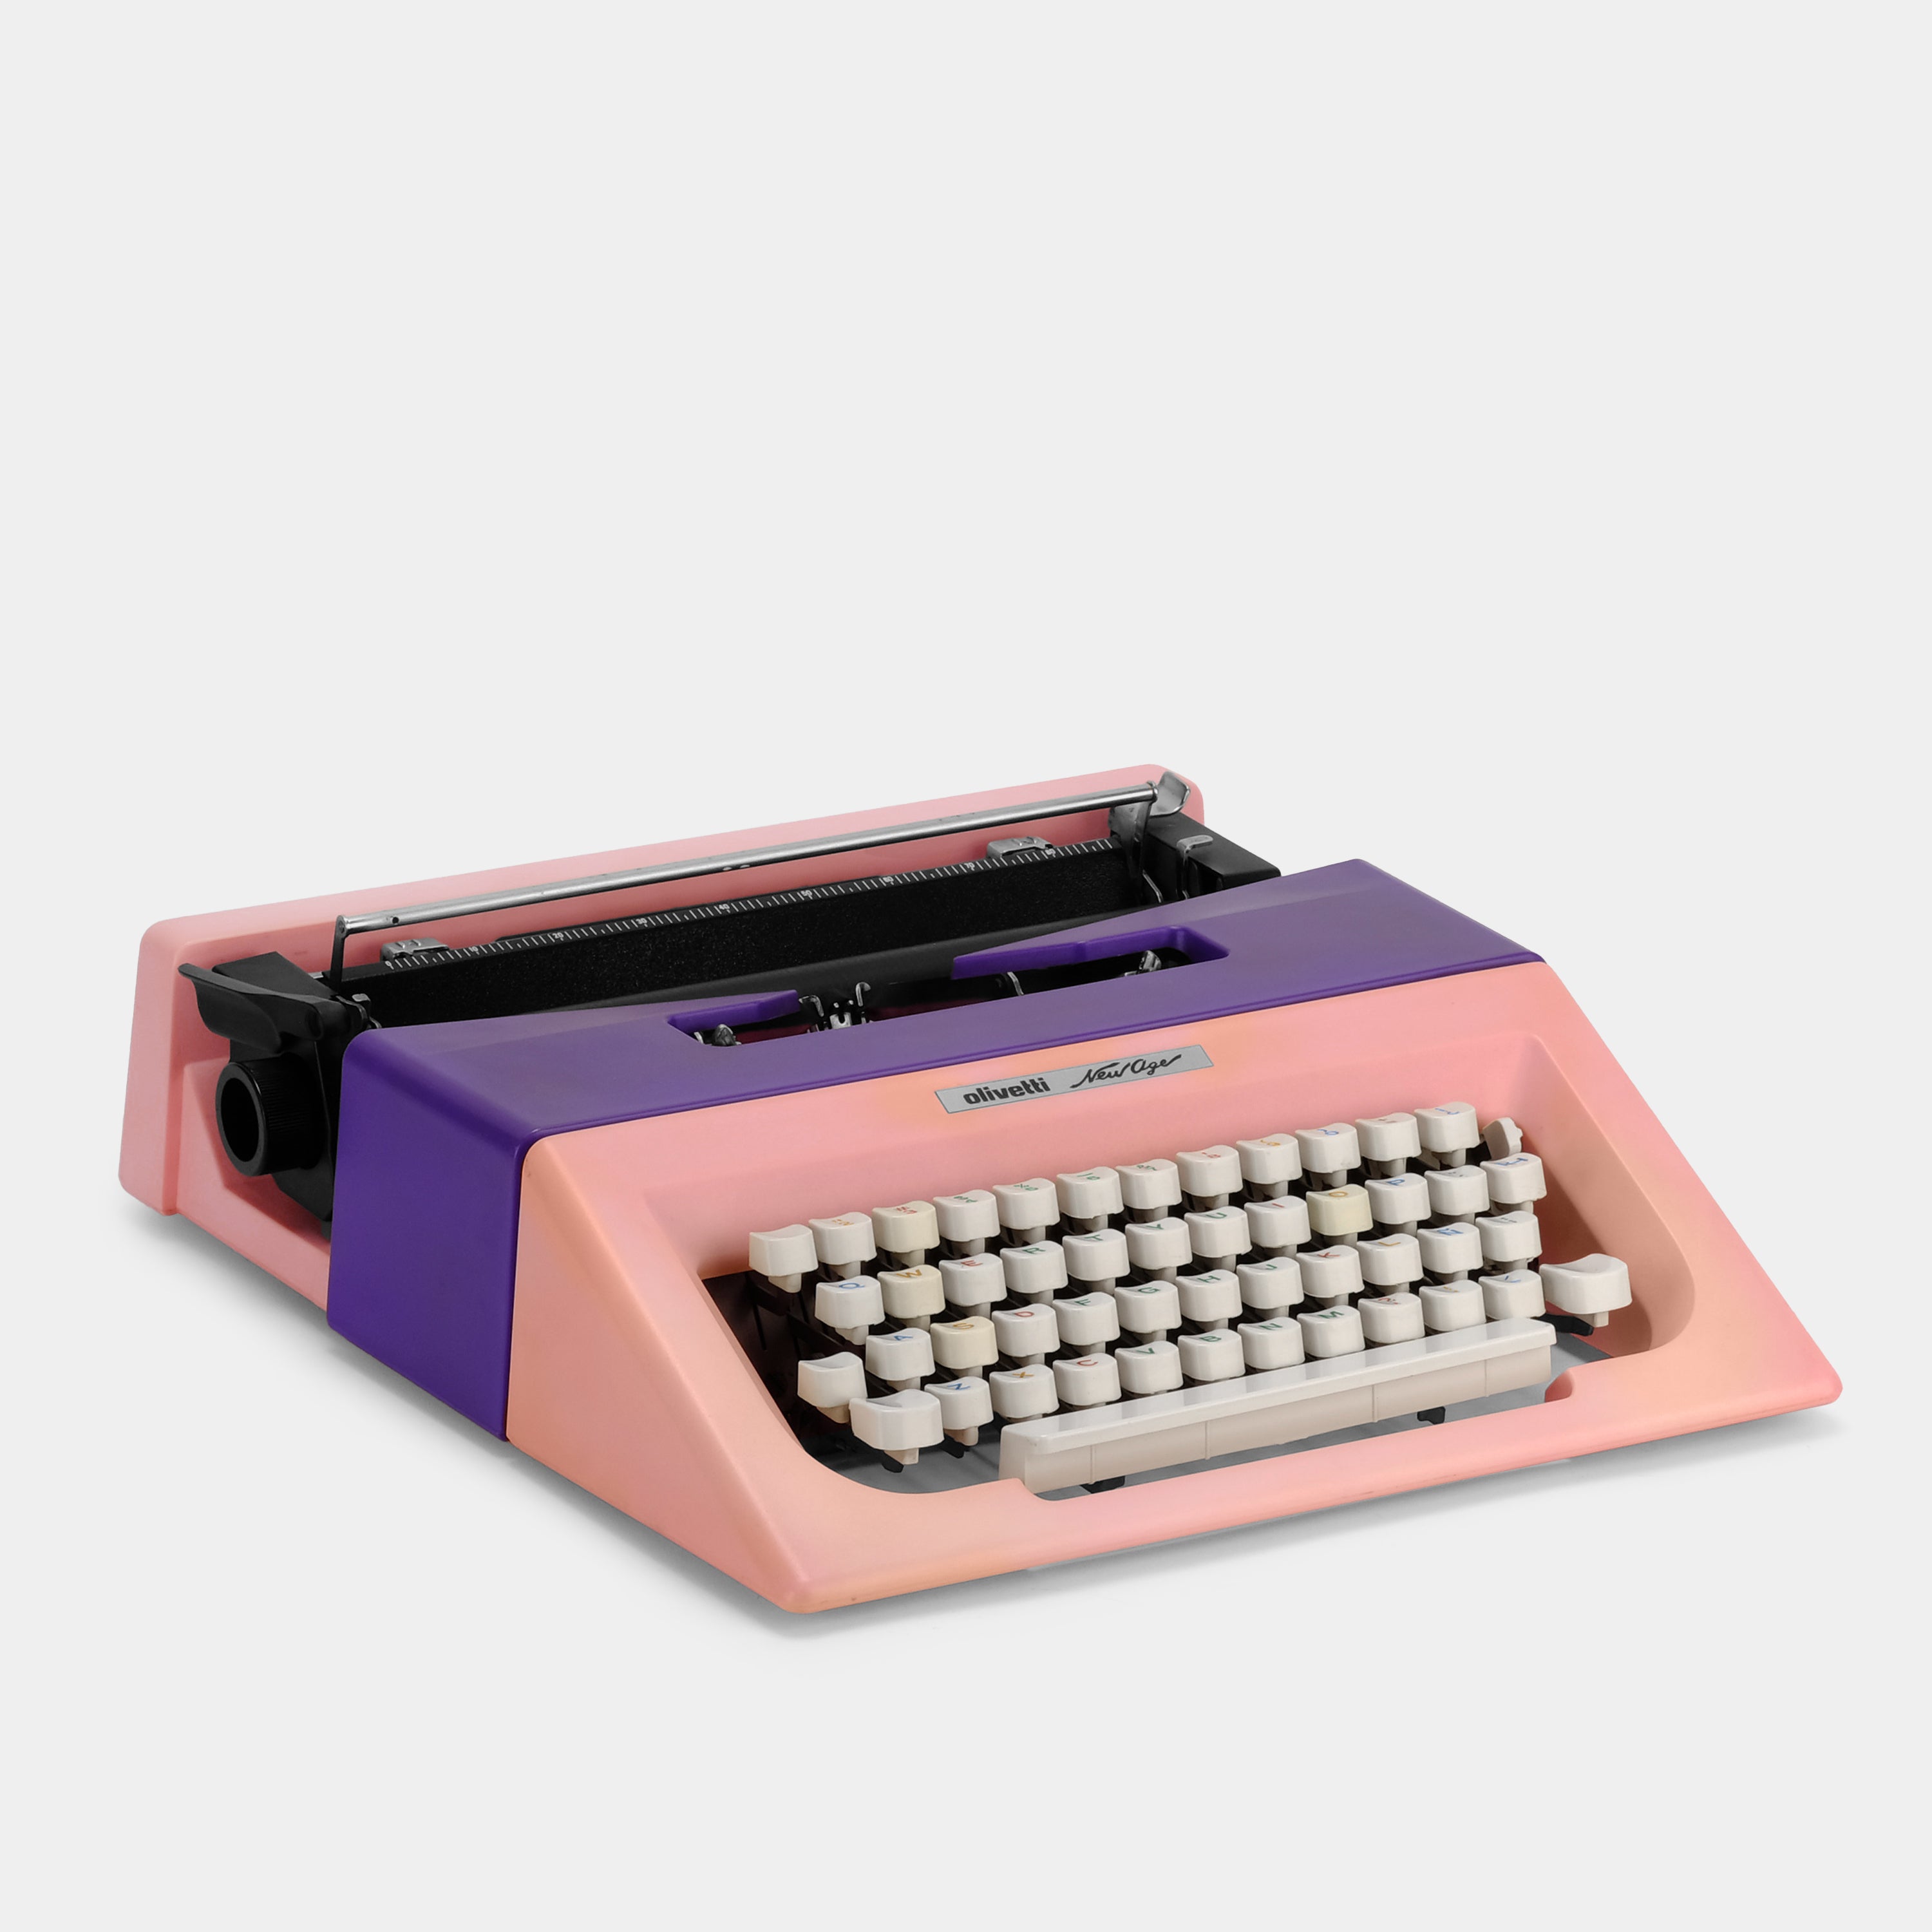 Olivetti New Age Pink and Purple Manual Typewriter